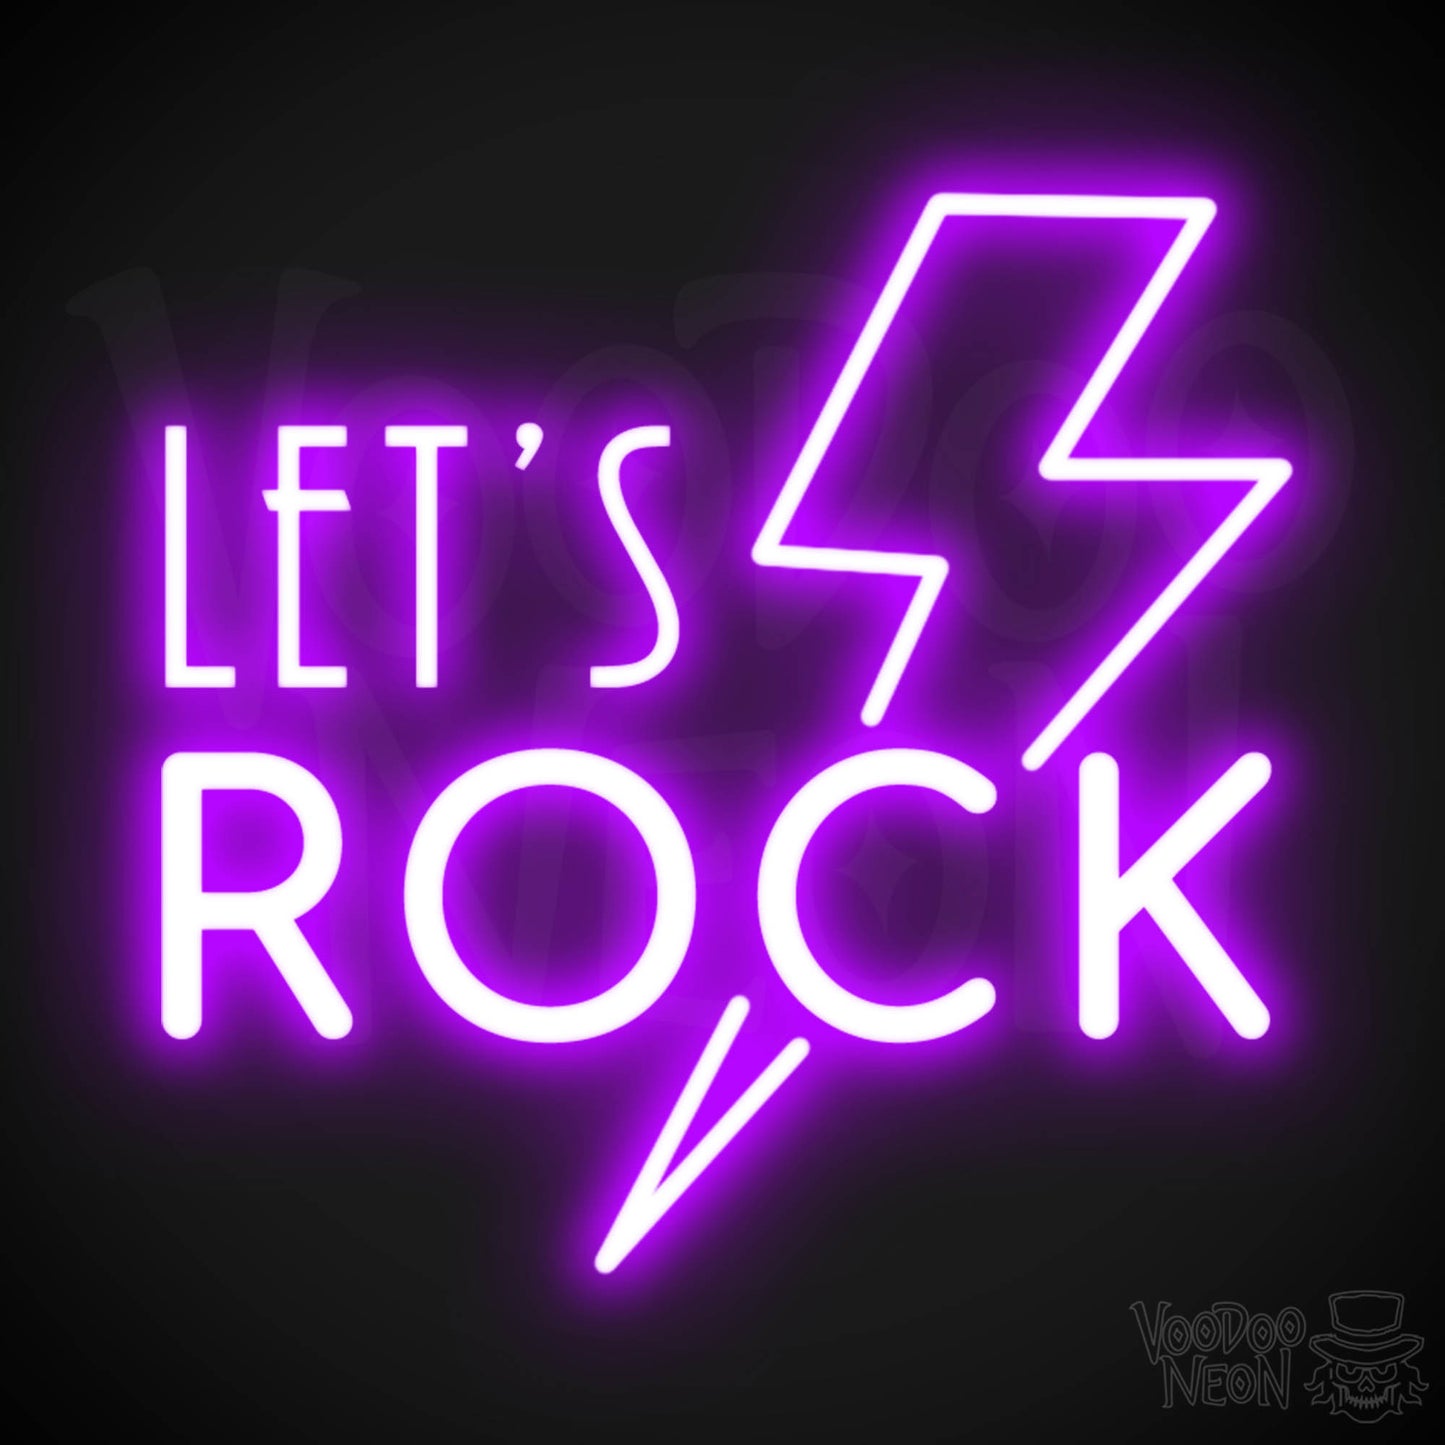 Let's Rock Neon Sign - Let's Rock LED Light Up Sign - Color Purple